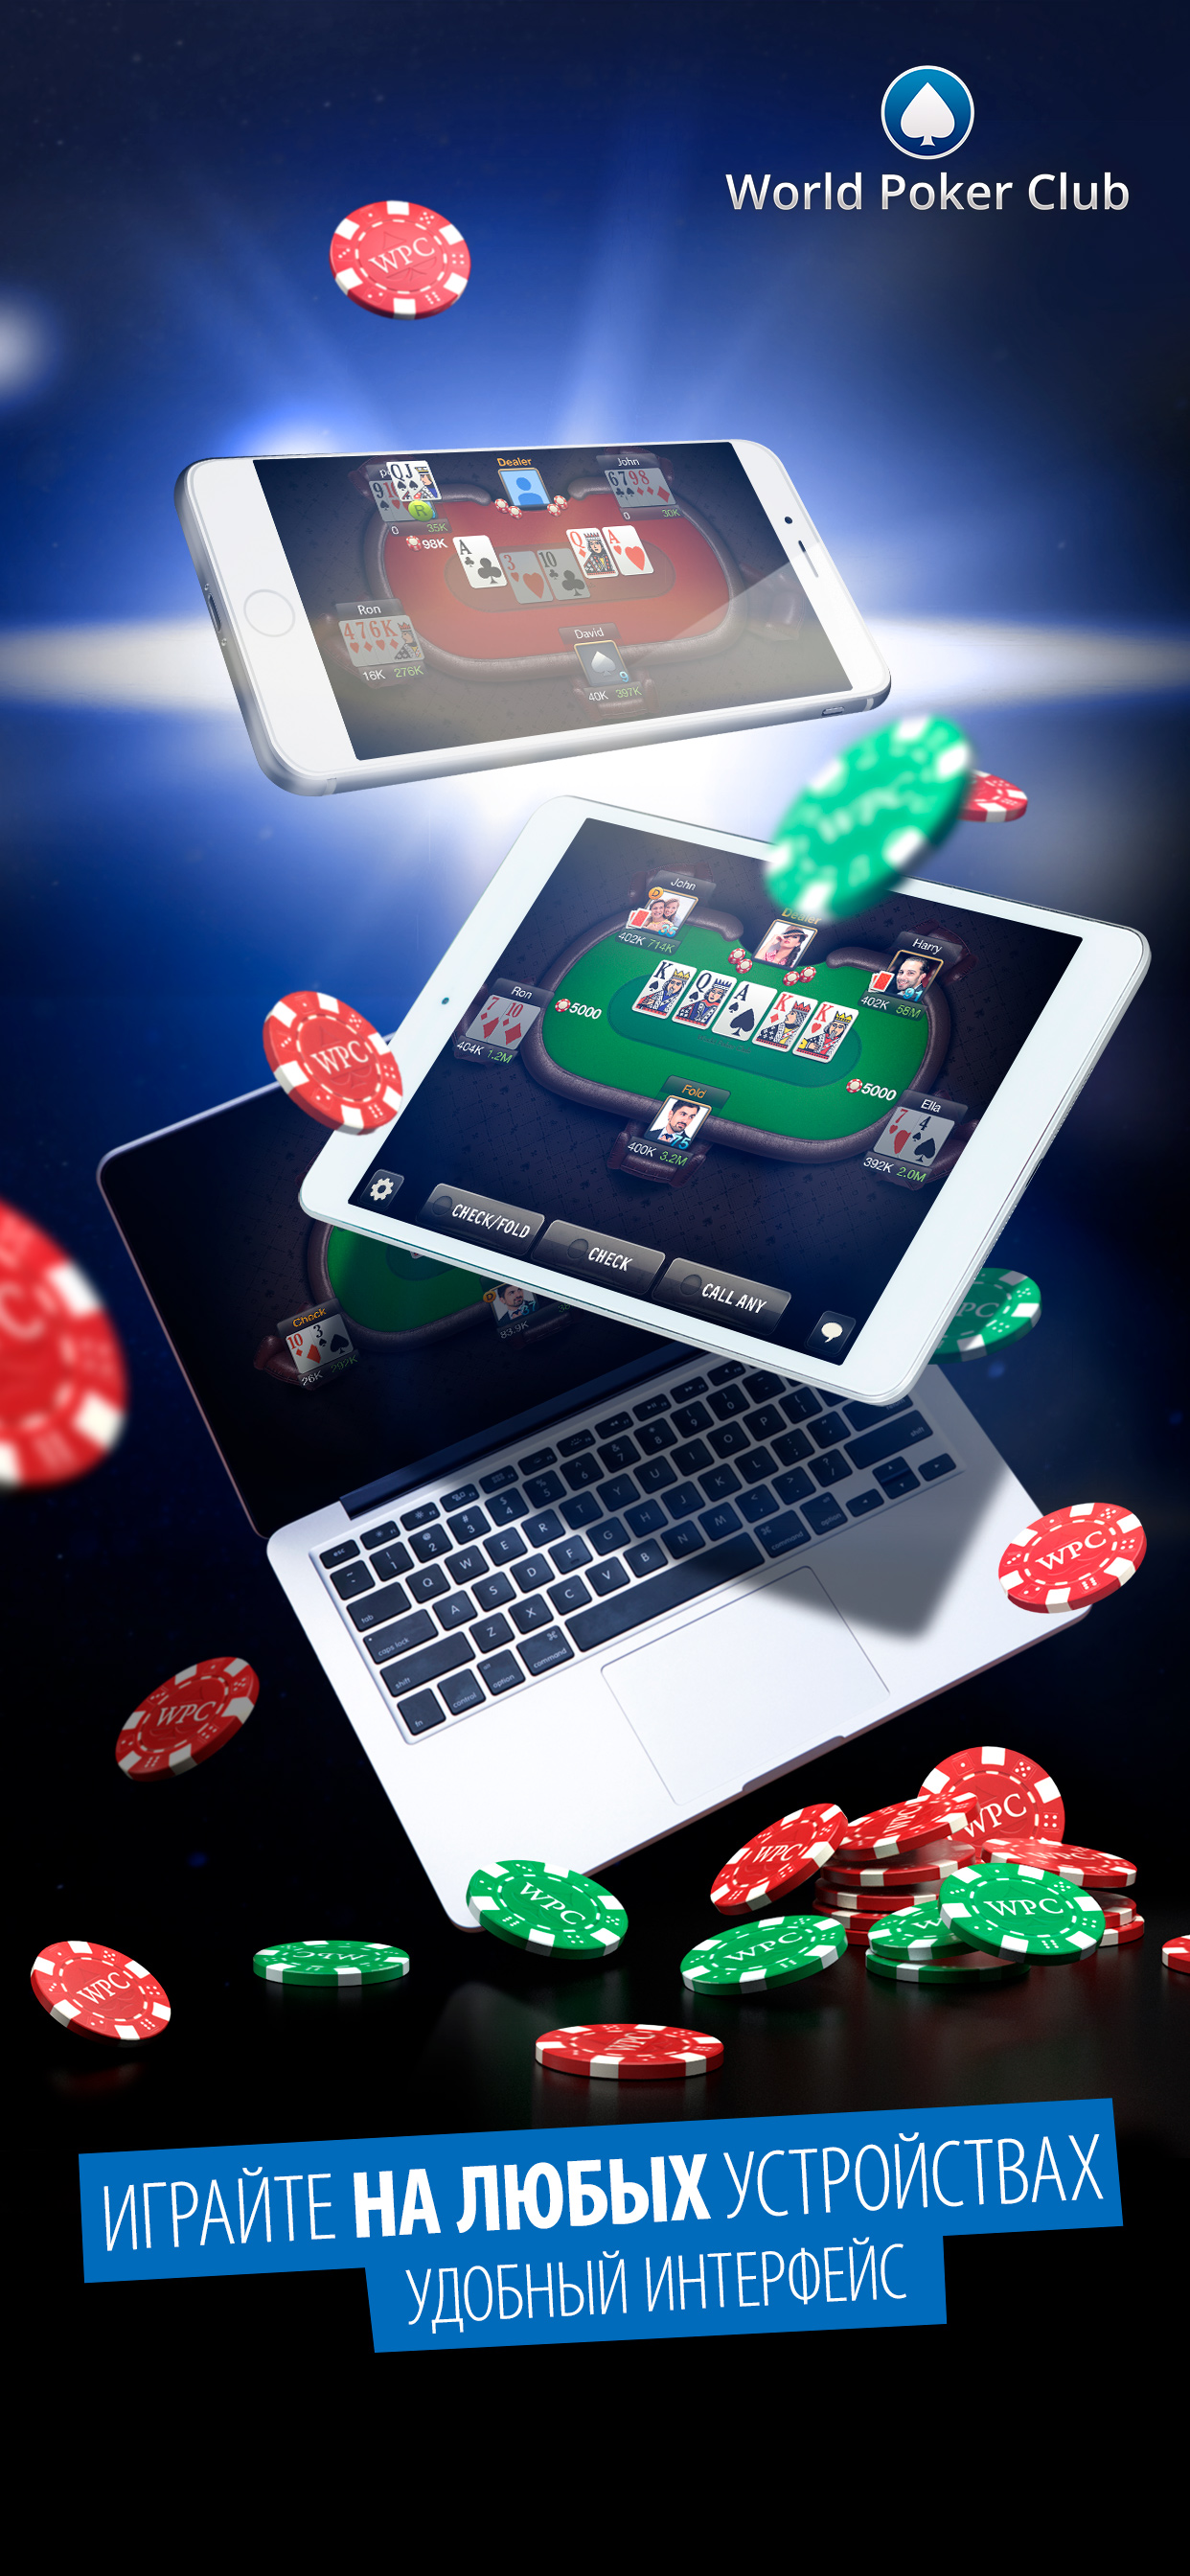 Изображение: Poker Games: World Poker Club